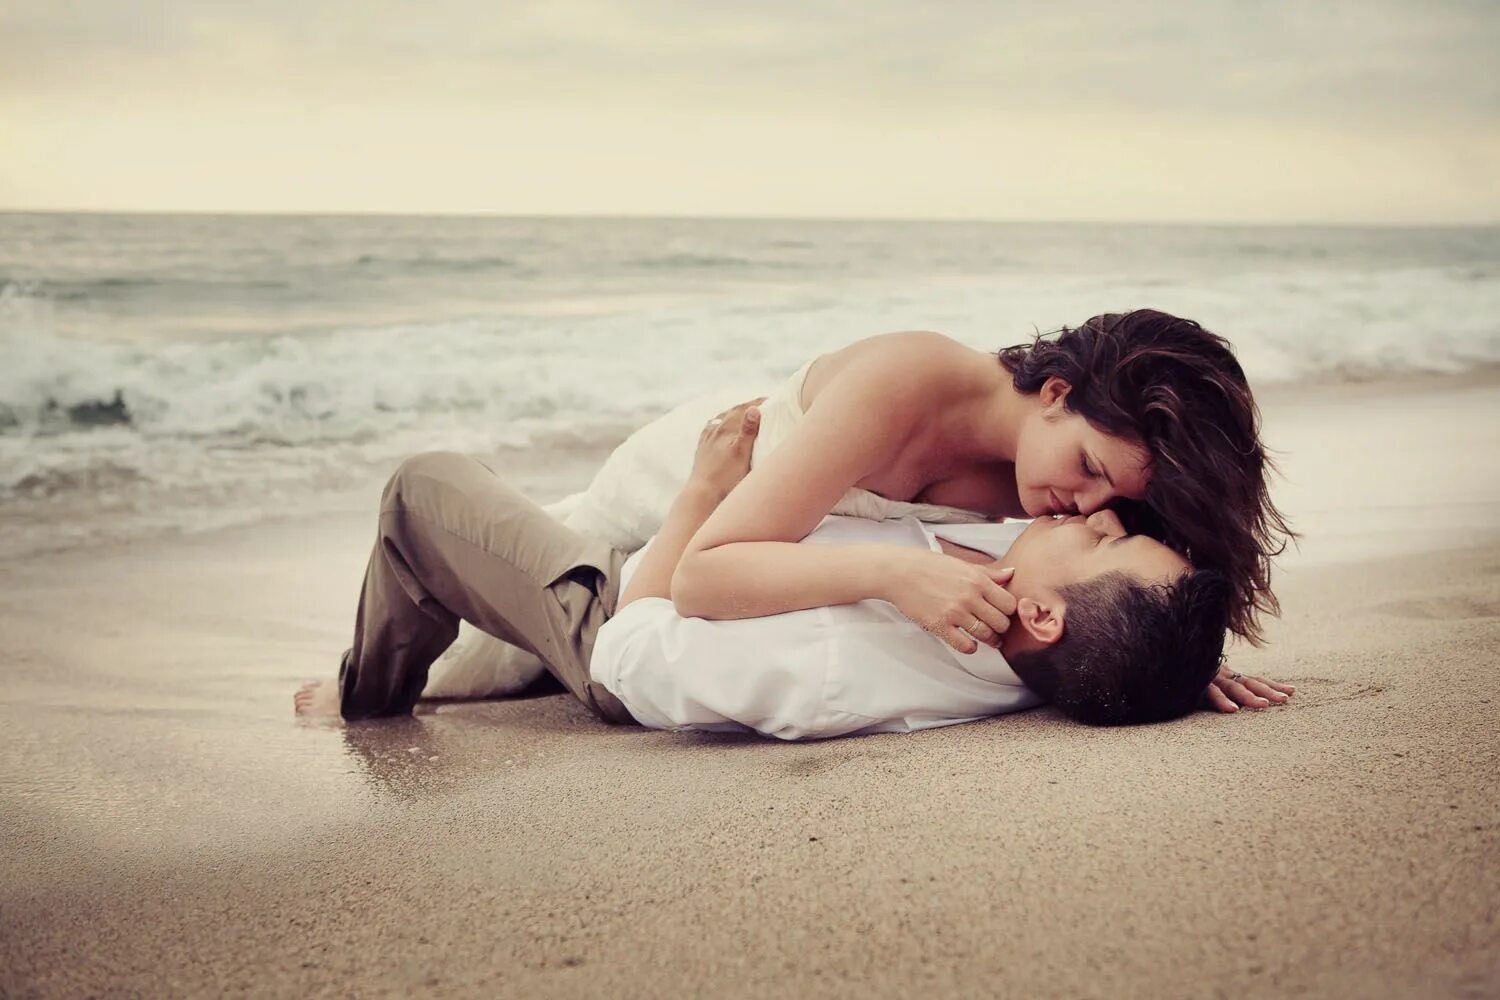 Романтик поцелуй. Романтический поцелуй. Романтические объятия. Романтика обнимашки. Романтическая фотосессия на пляже.